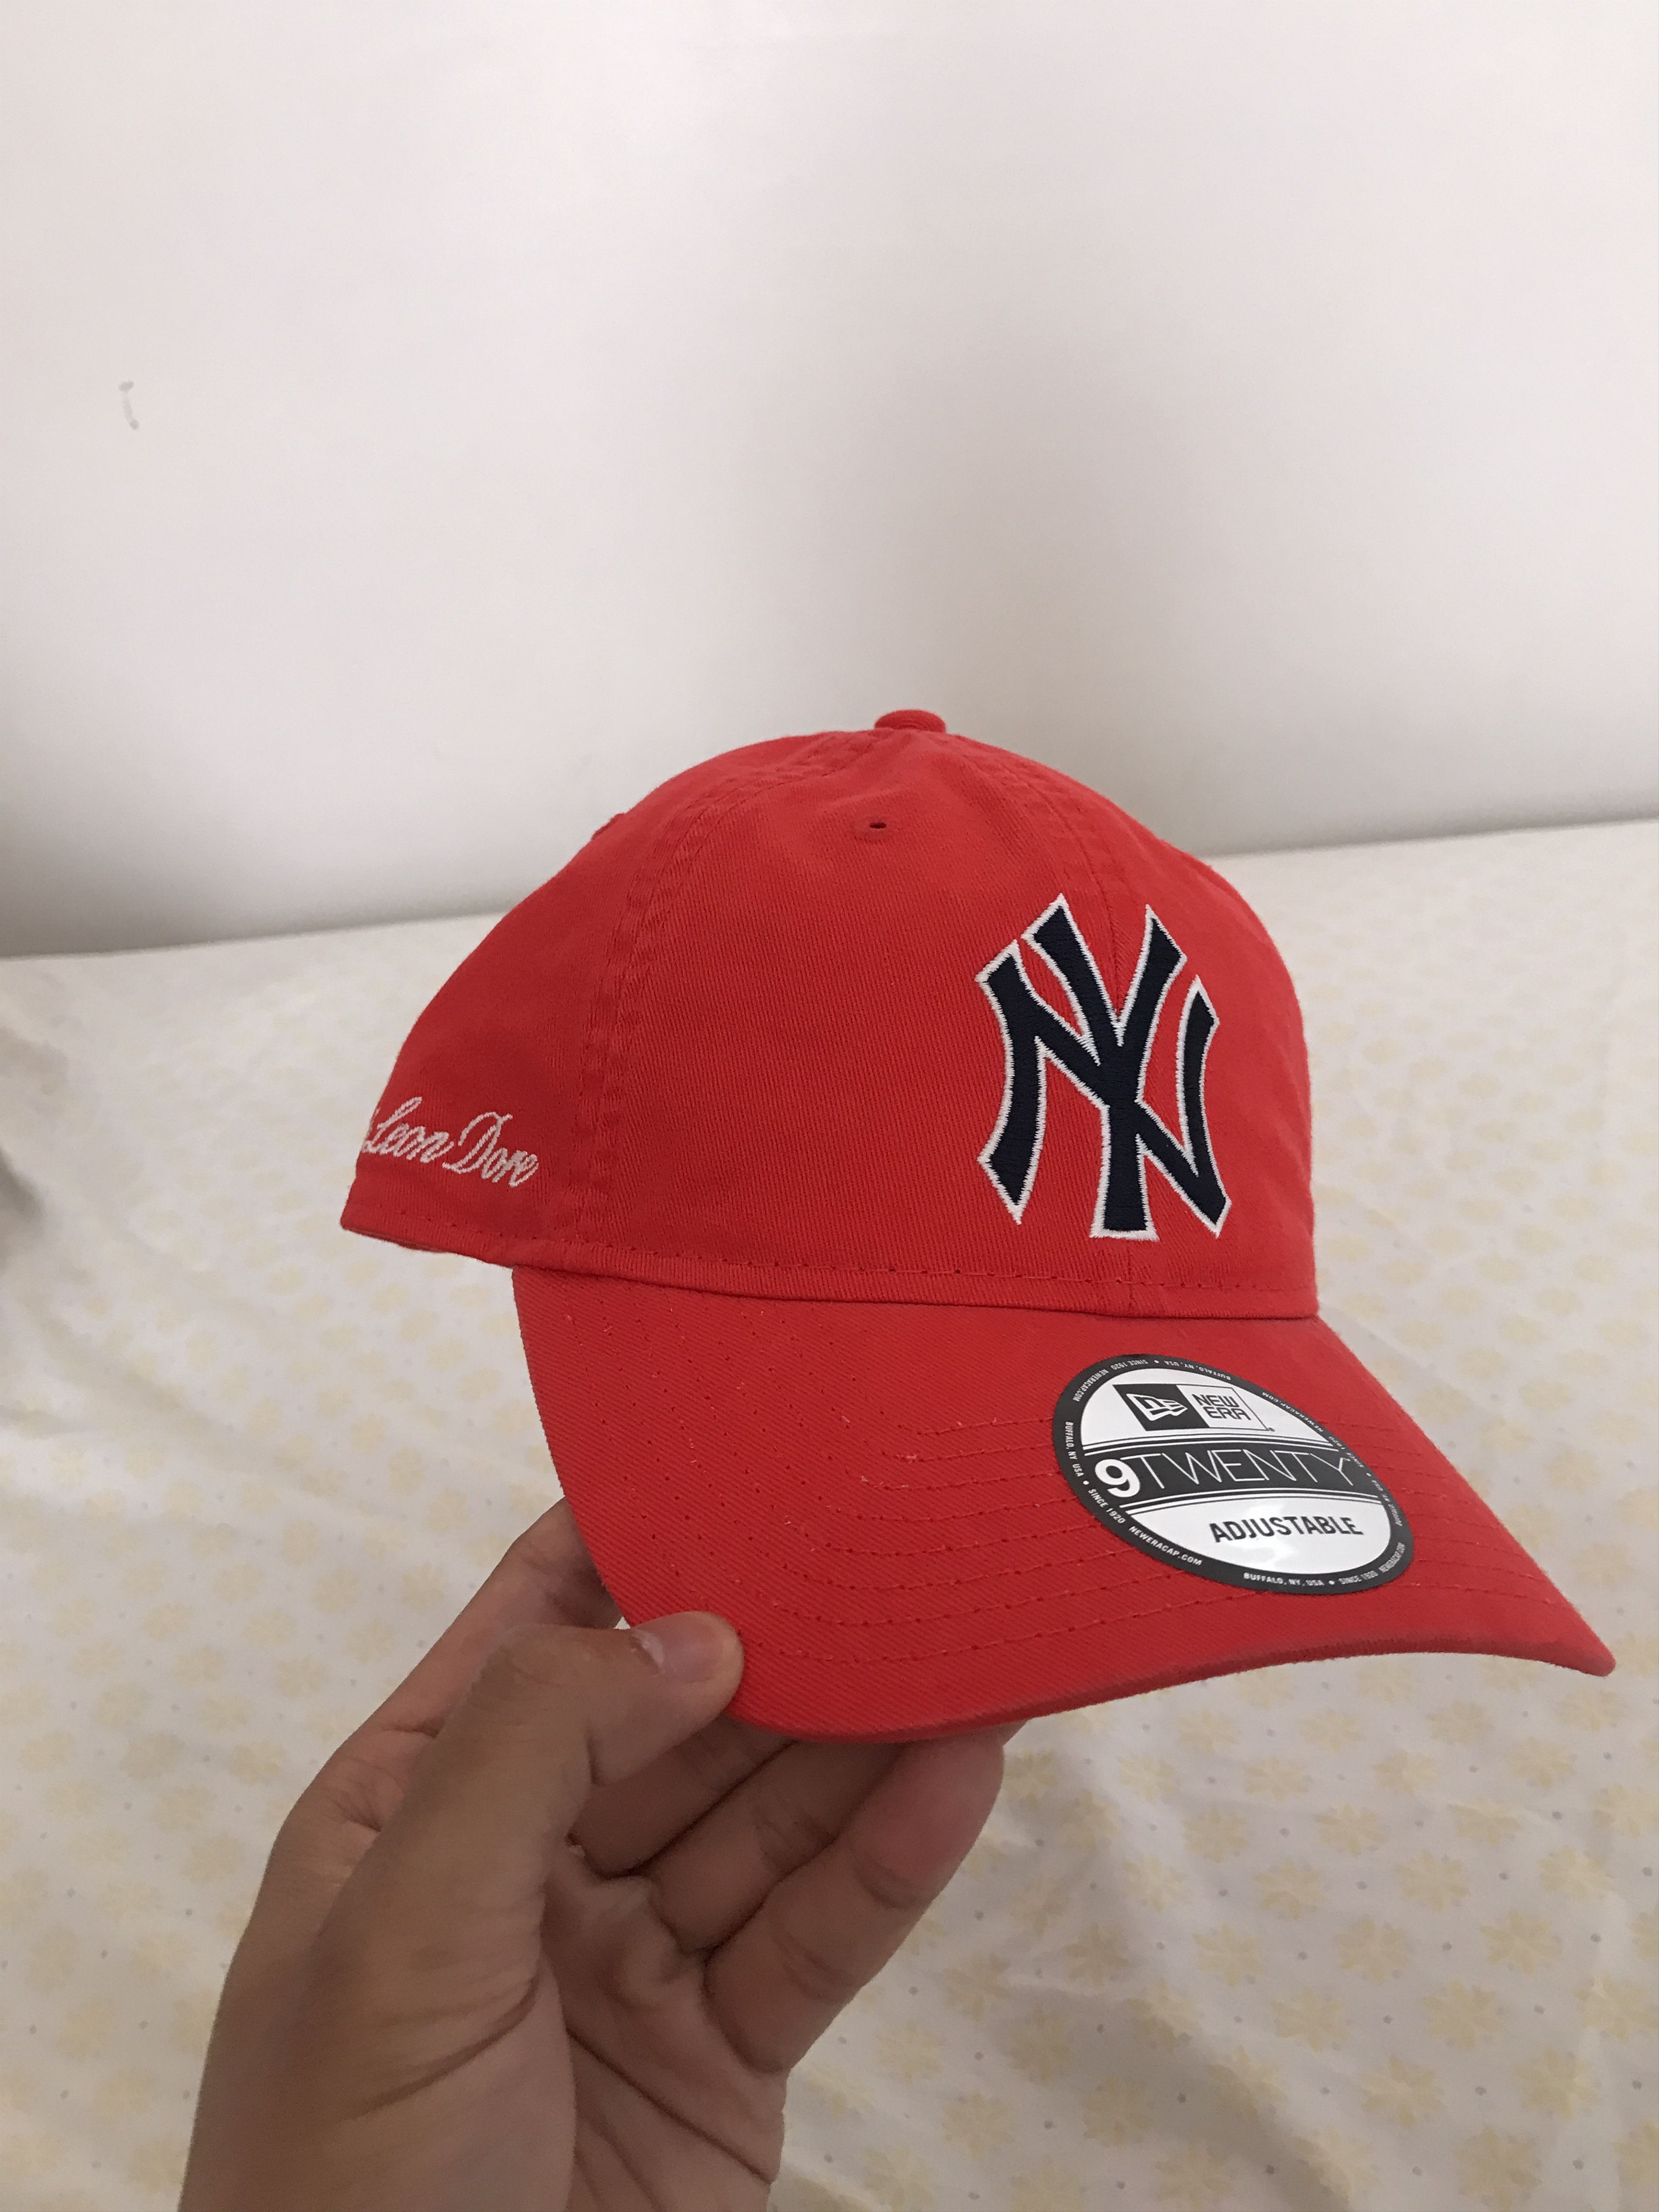 Aime Leon Dore Red ALD / New Era Yankees Ballpark Hat OS | Grailed